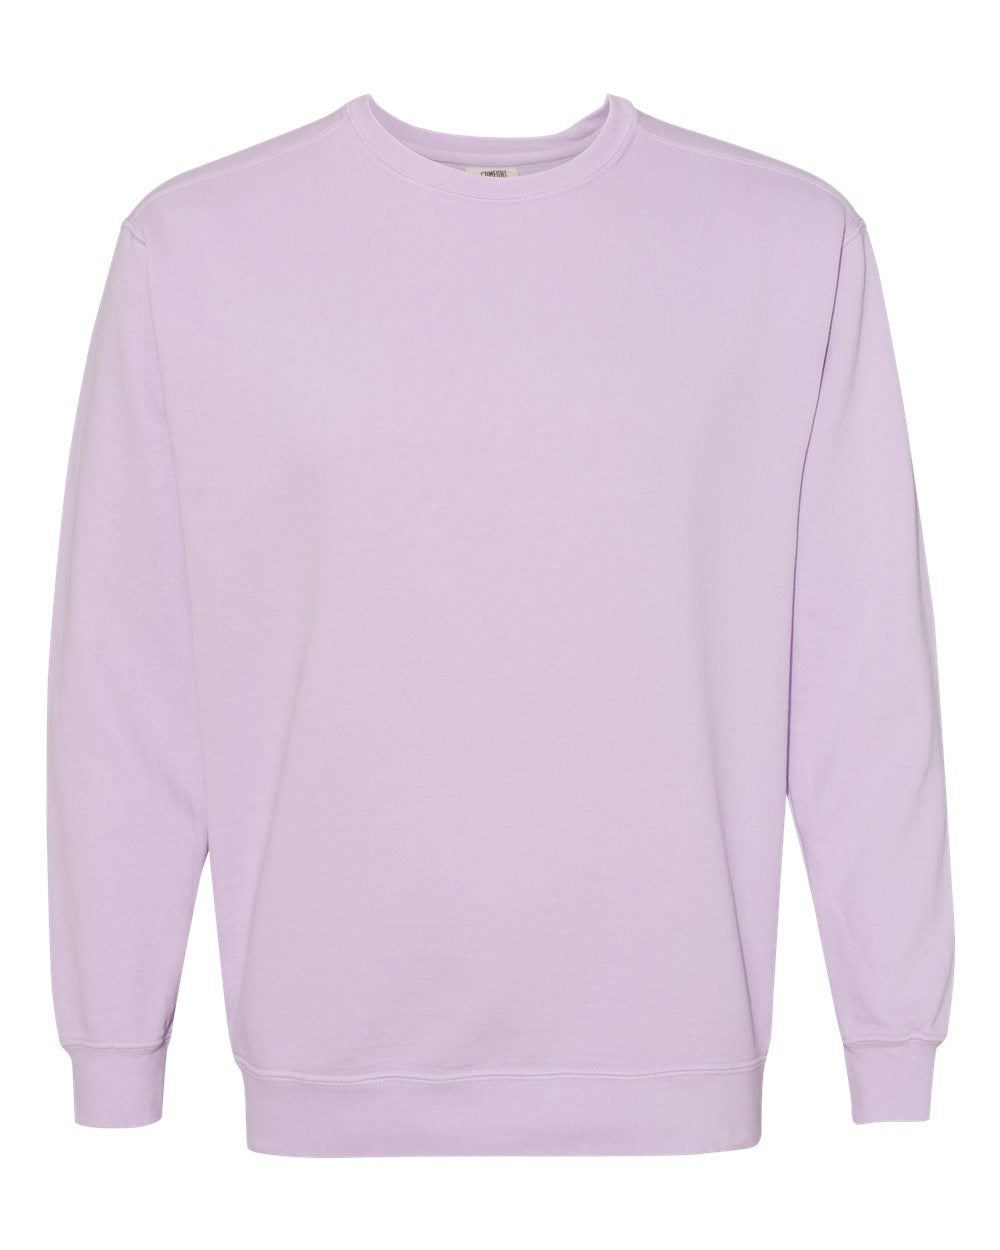 Comfort Colors Garment-Dyed Crewneck Sweatshirt (1566) in Orchid